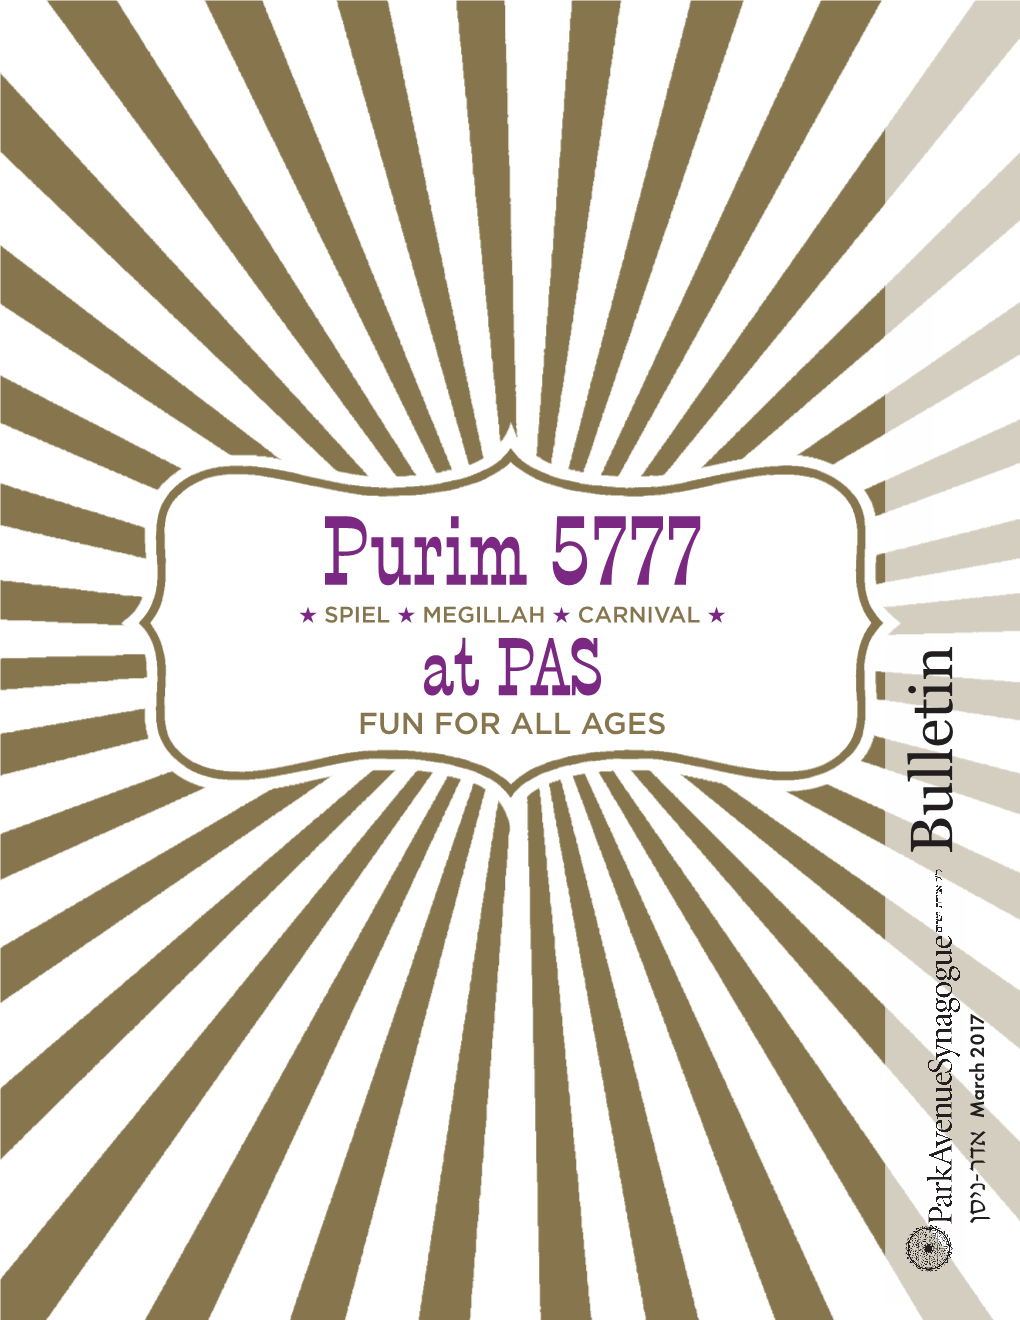 Purim 5777 Purim FUN for ALLAGES at PAS